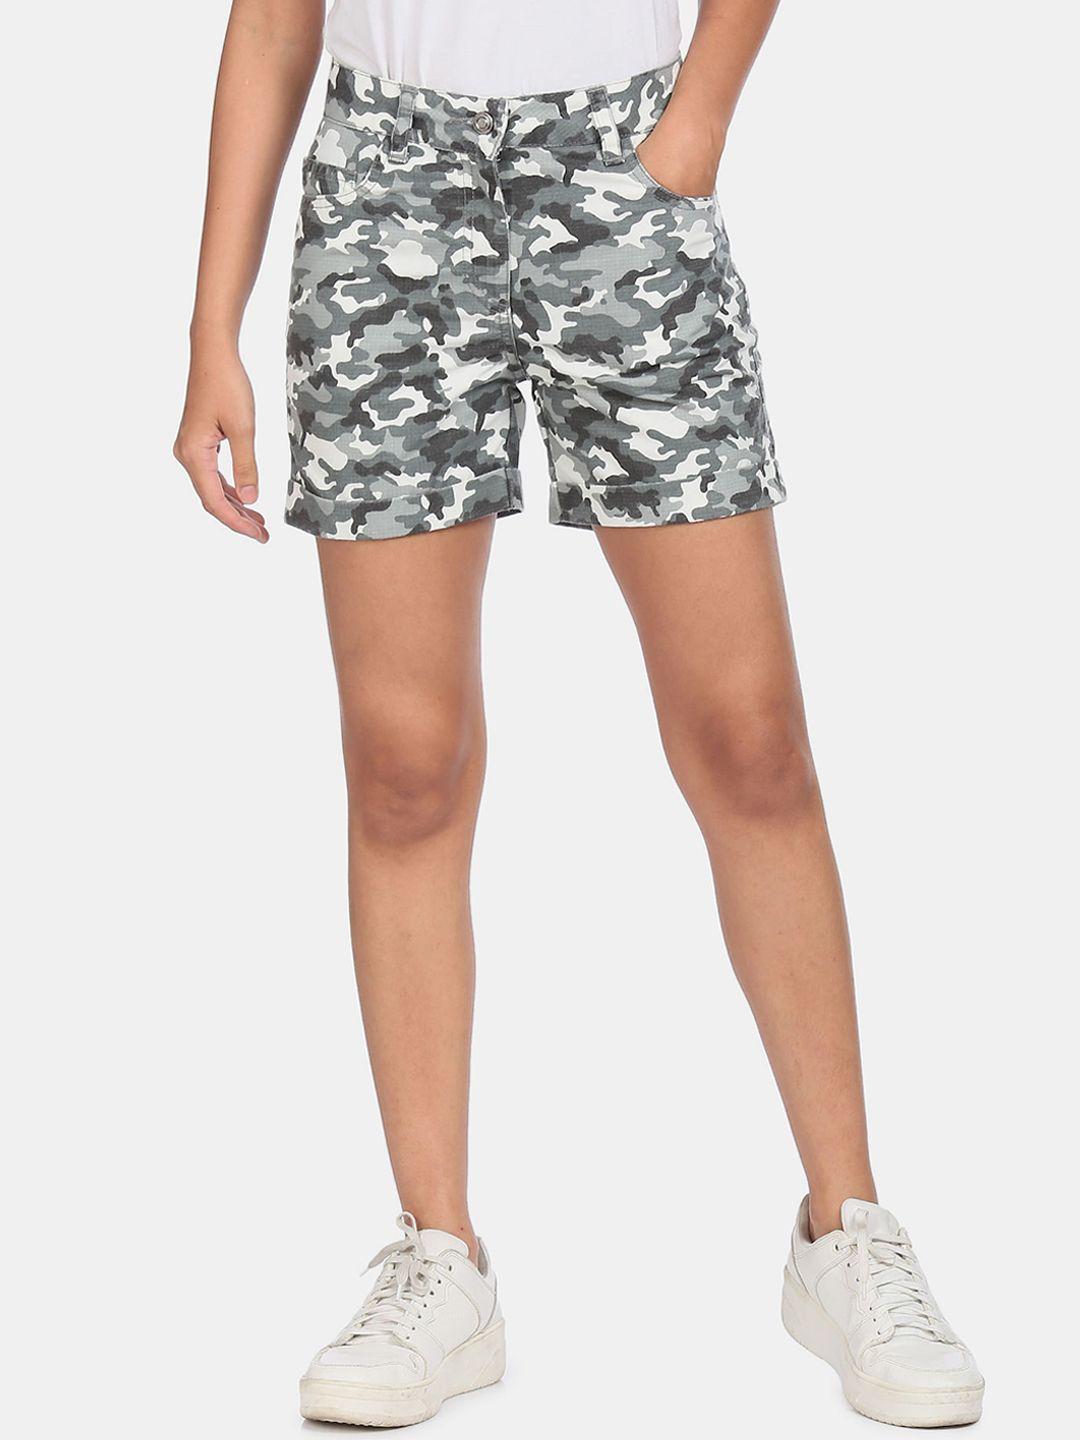 sugr-women-grey-mid-rise-camo-print-shorts